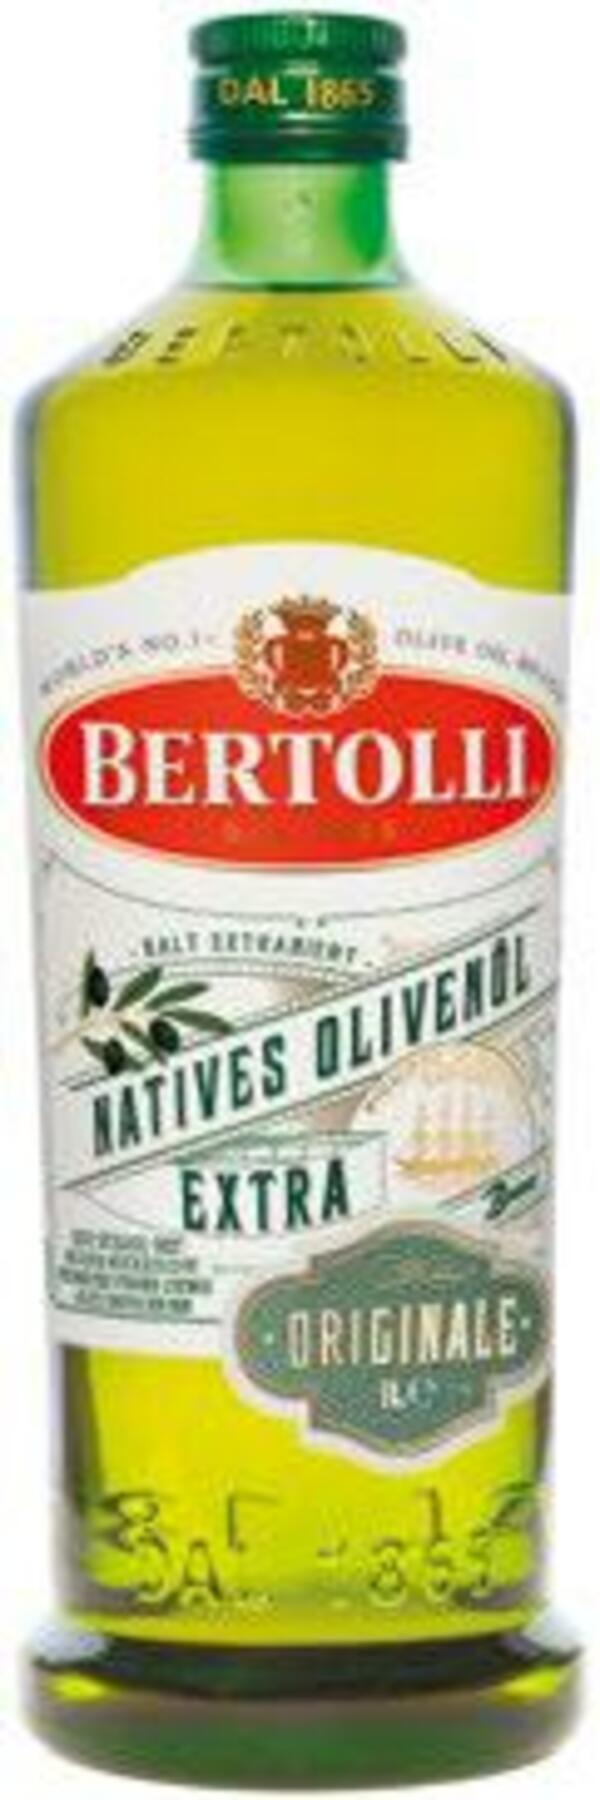 Bild 1 von Bertolli Natives Olivenöl Extra Originale